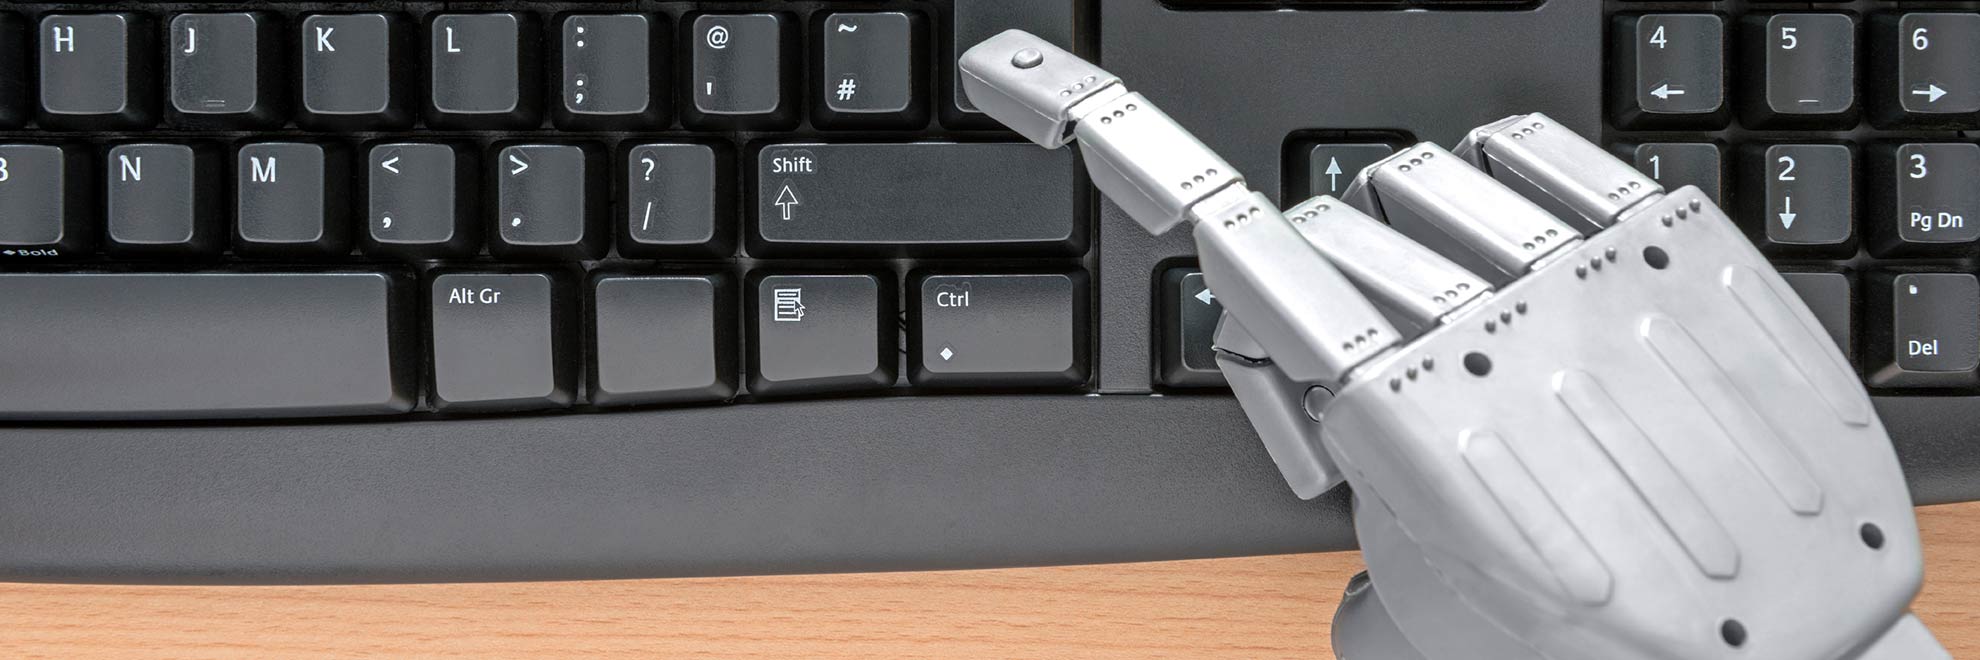 robot-hand-using-keyboard